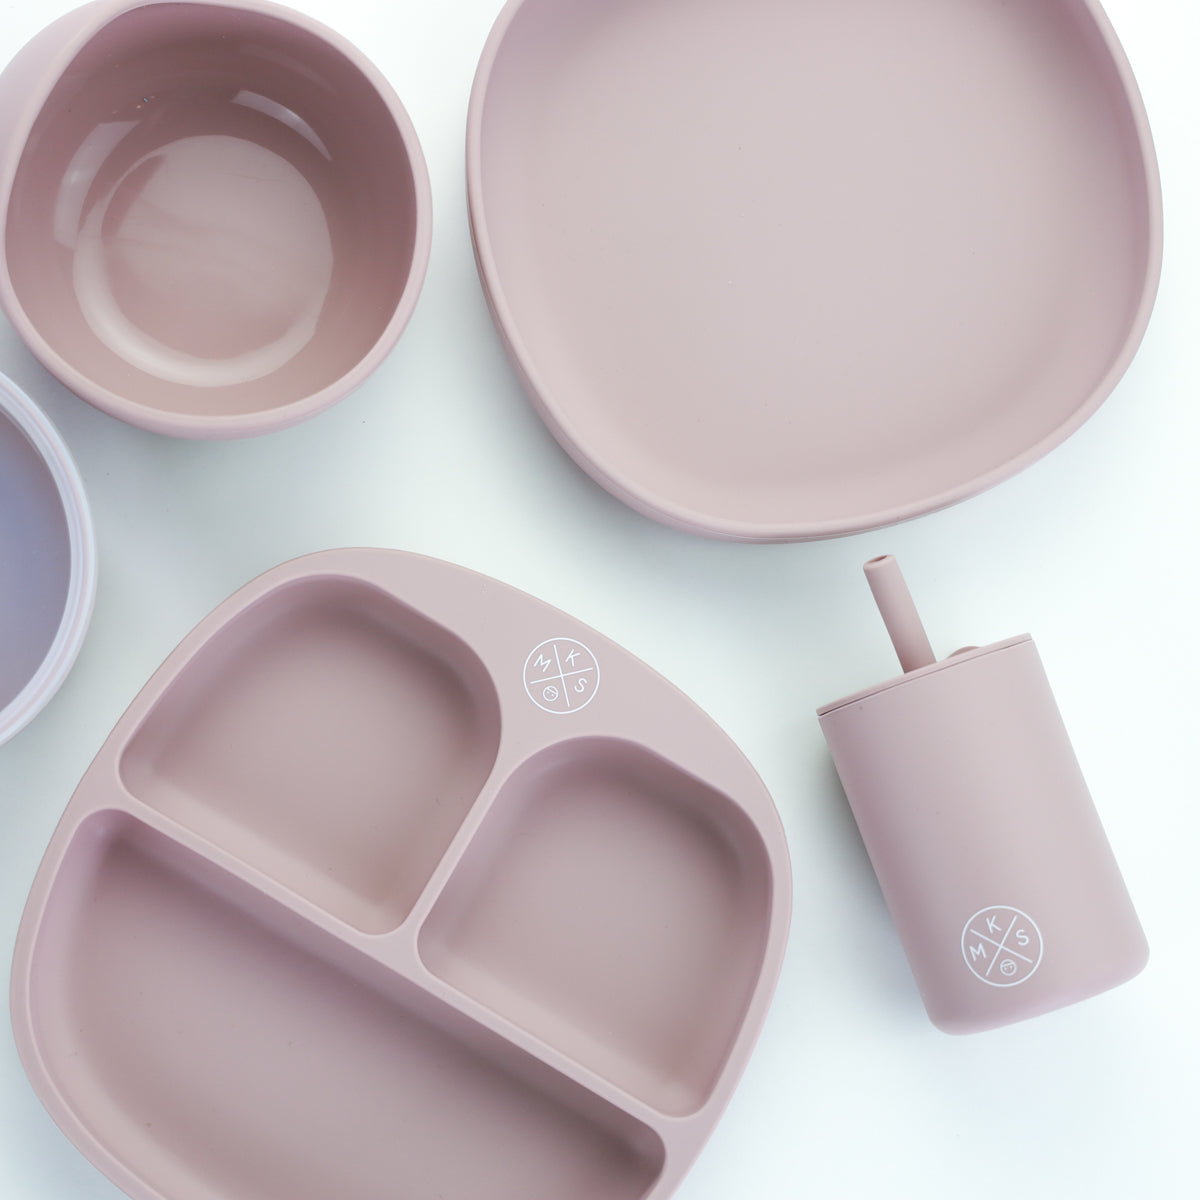 Suction plate compartments dinnerware babies silicone reusable durable unbreakable dinnerware mks miminoo arizona usa lilac mauve girl pink